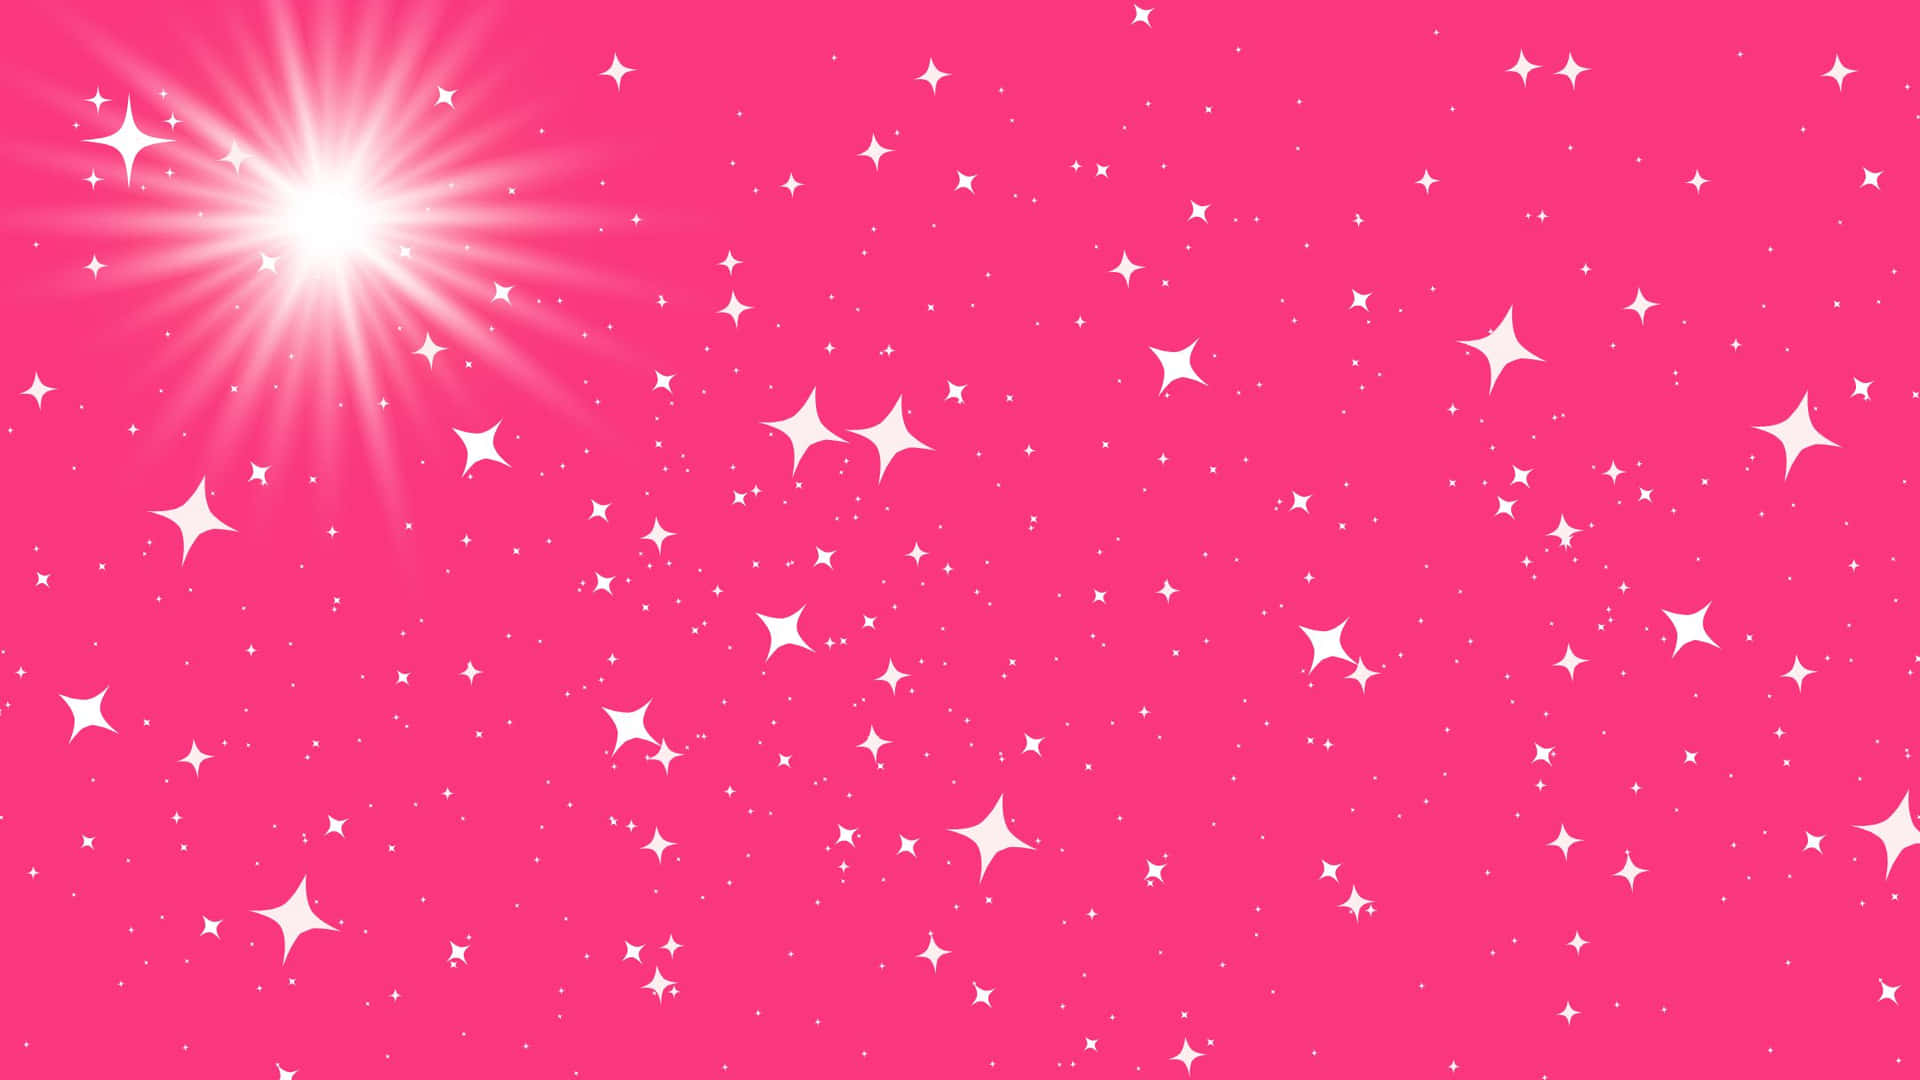 Sparkly Pink Background 2160 X 1215